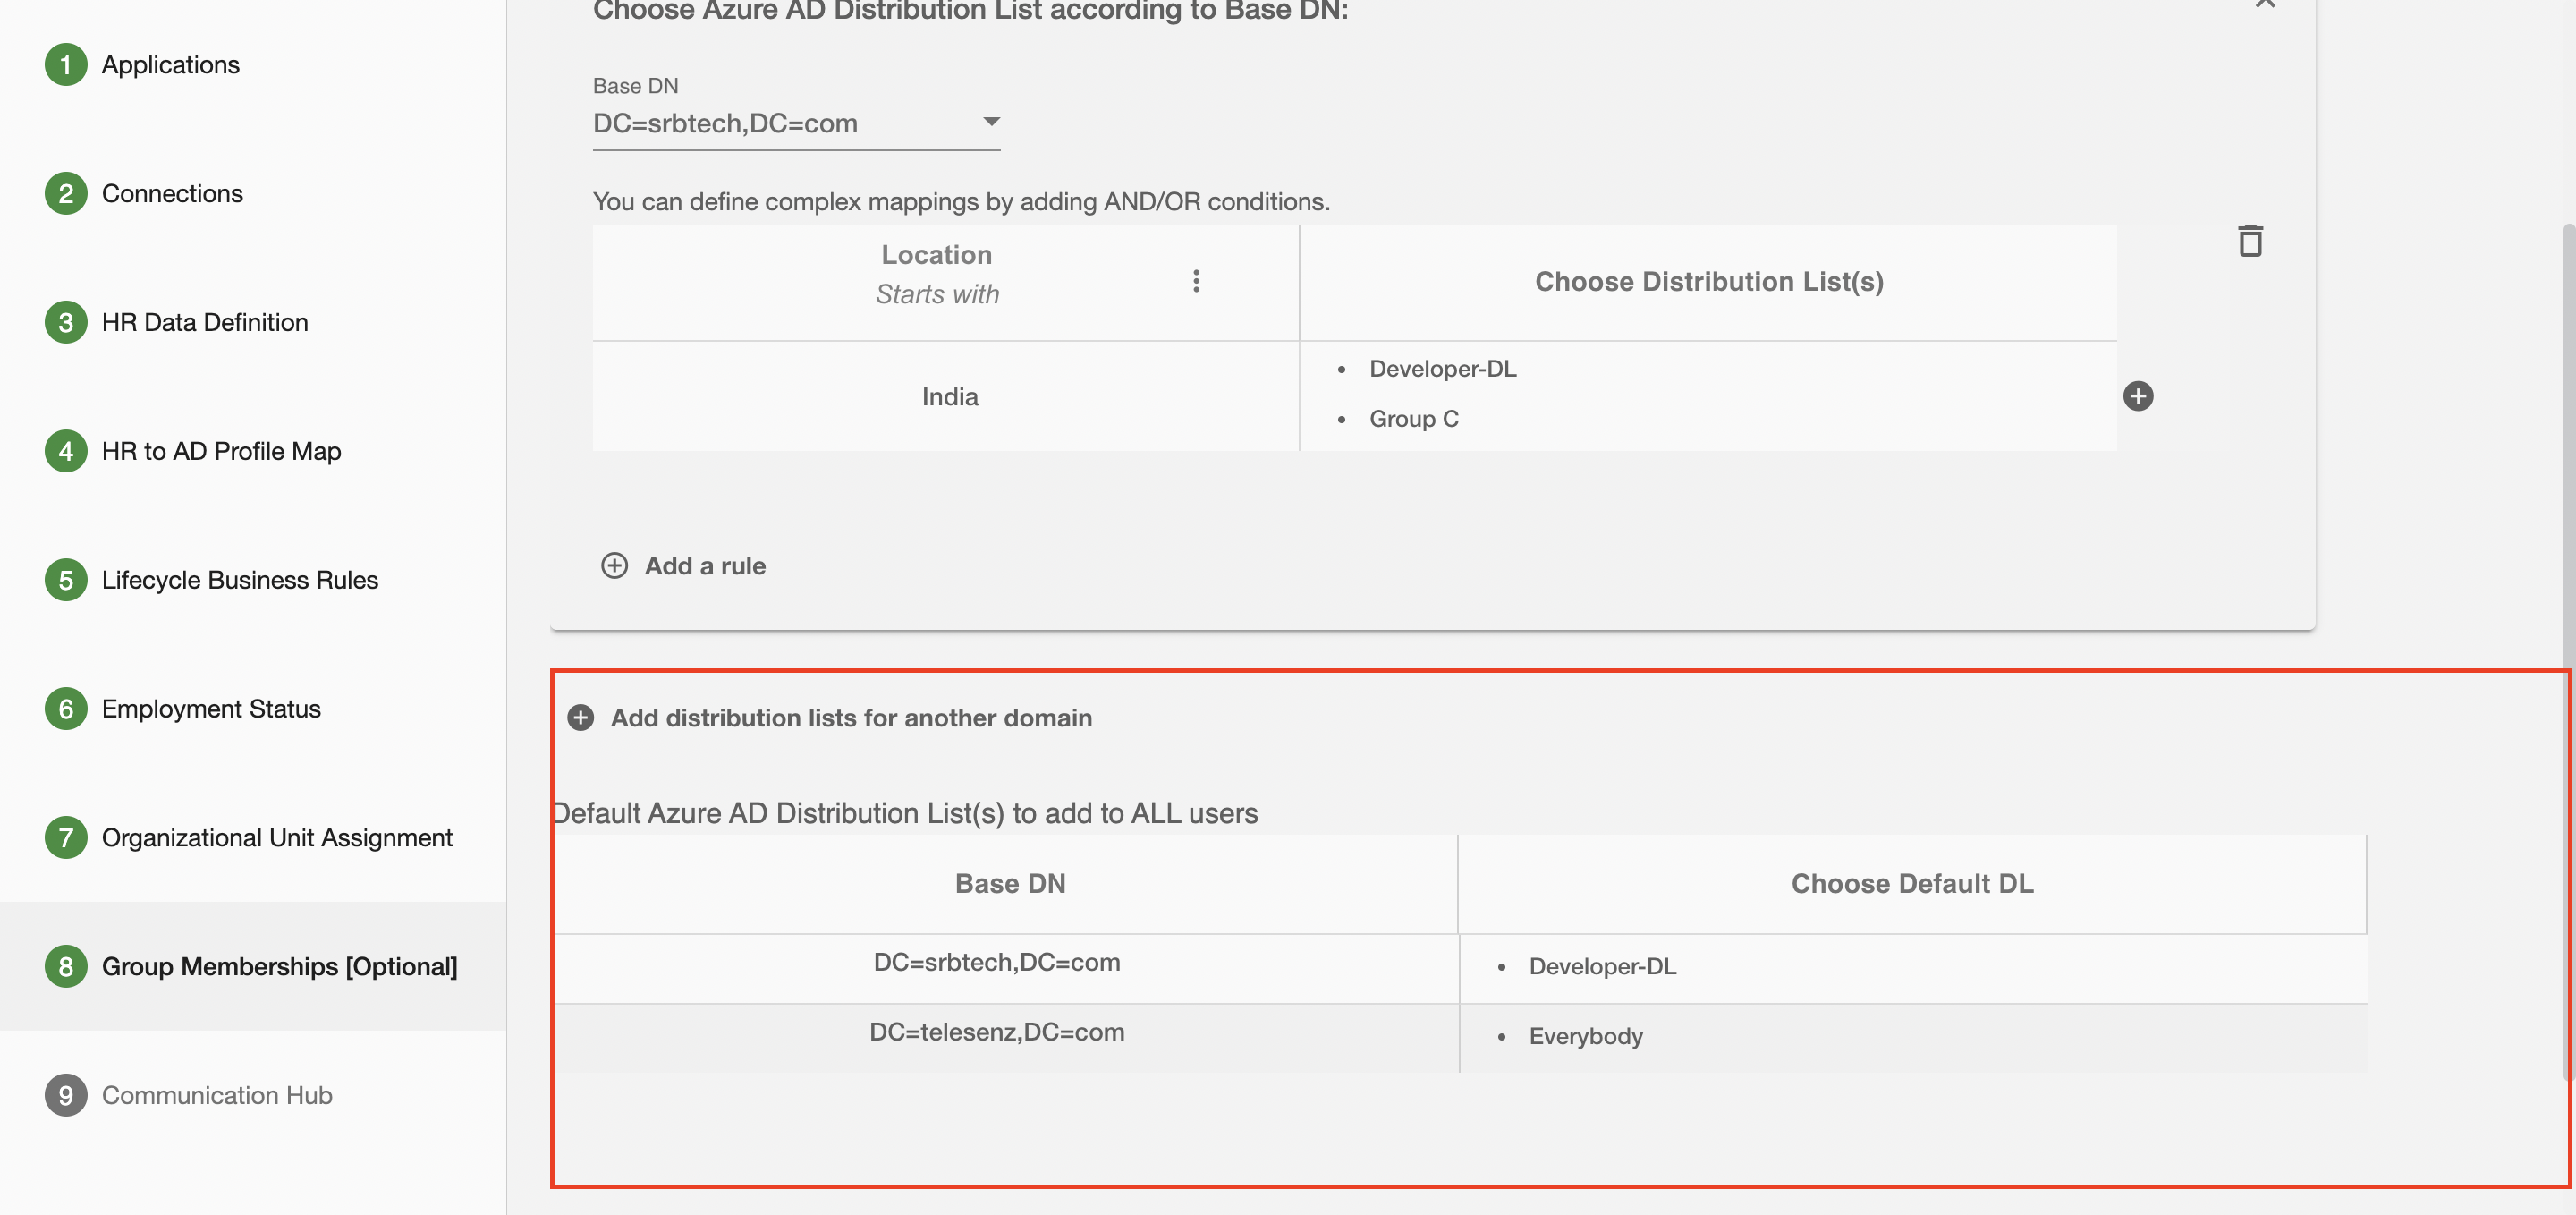 Default Azure AD Distribution ListBox